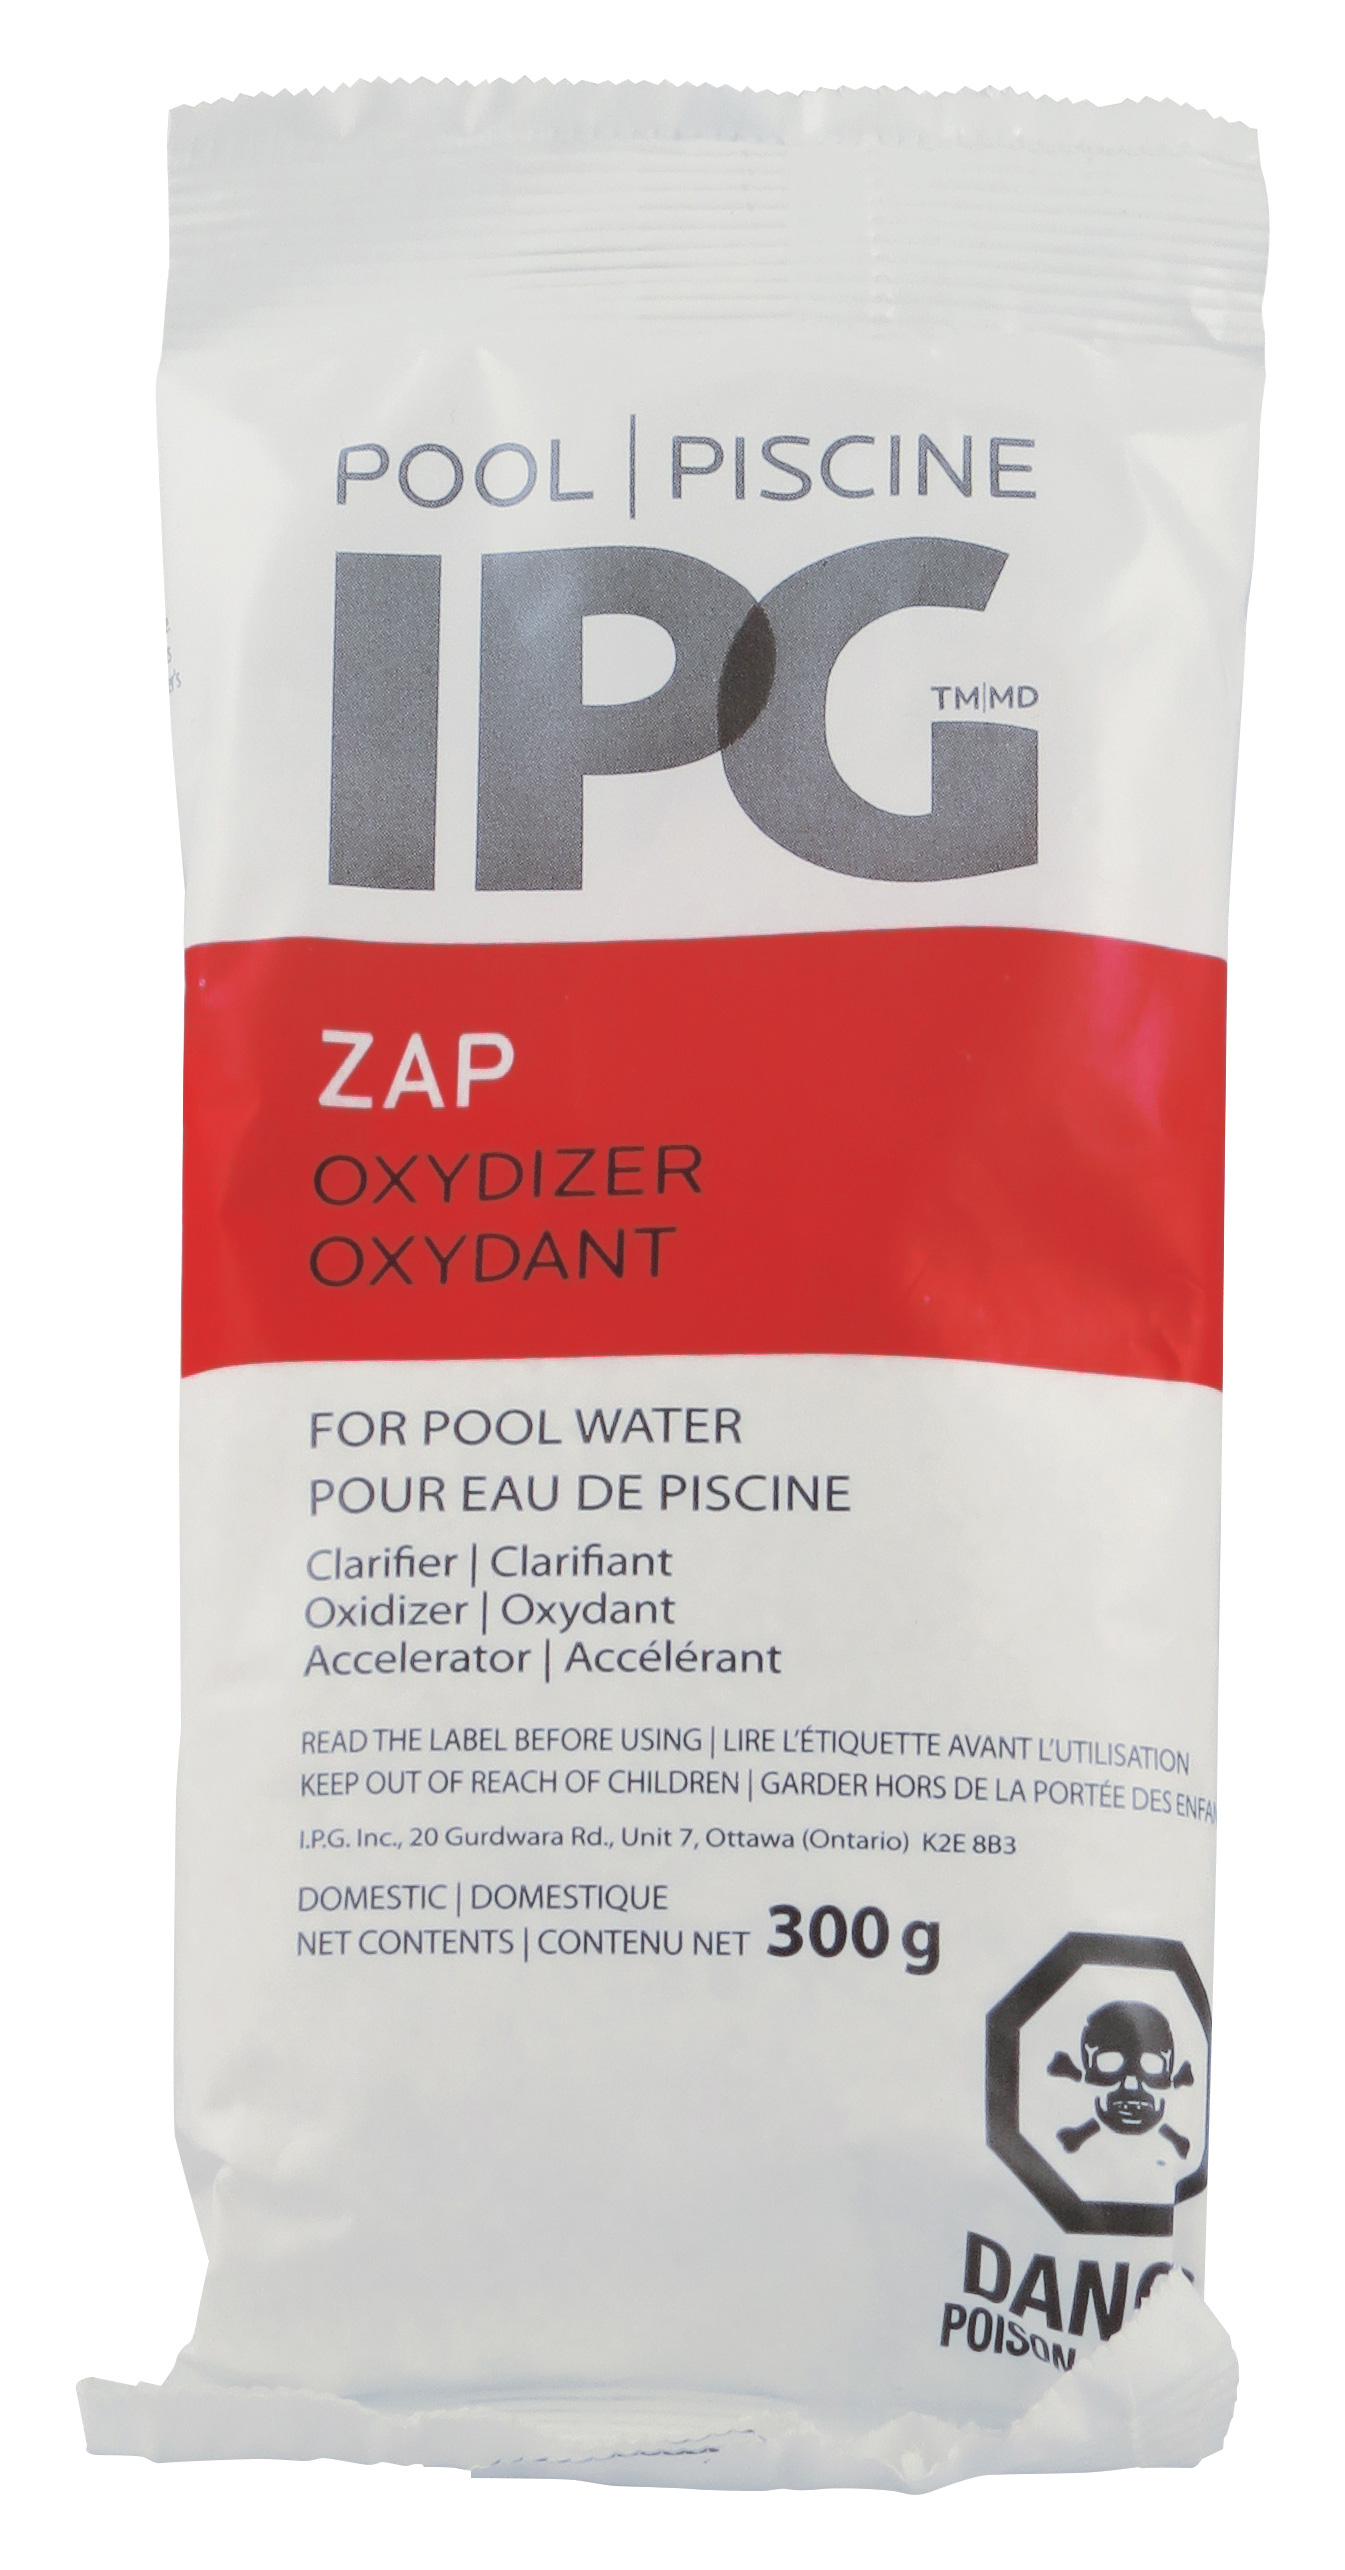 Zap oxidizer, clarifier and accelerator treatment